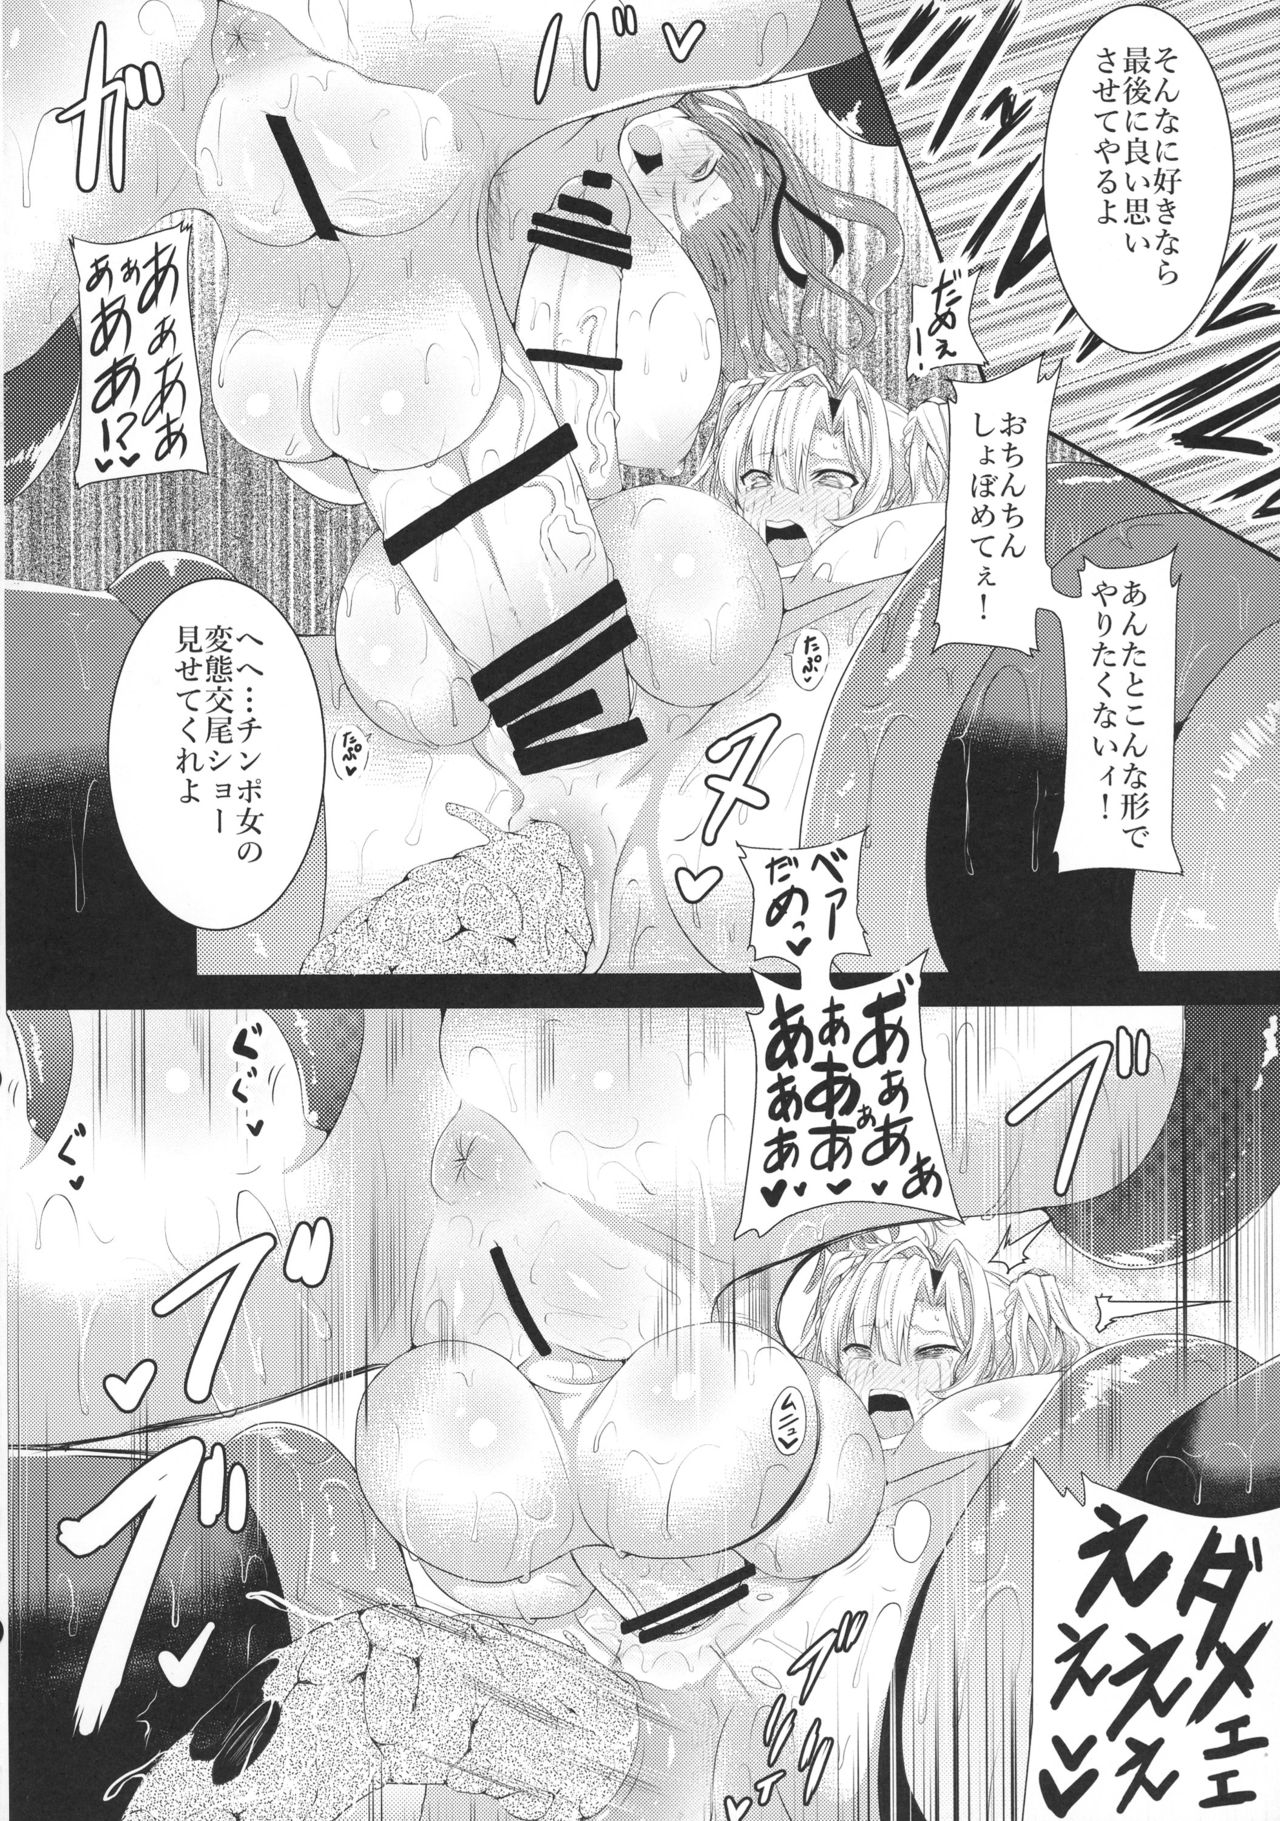 [HTSK (Rihito Akane)] HTSK5 (Granblue Fantasy) [2017-01-30] 15